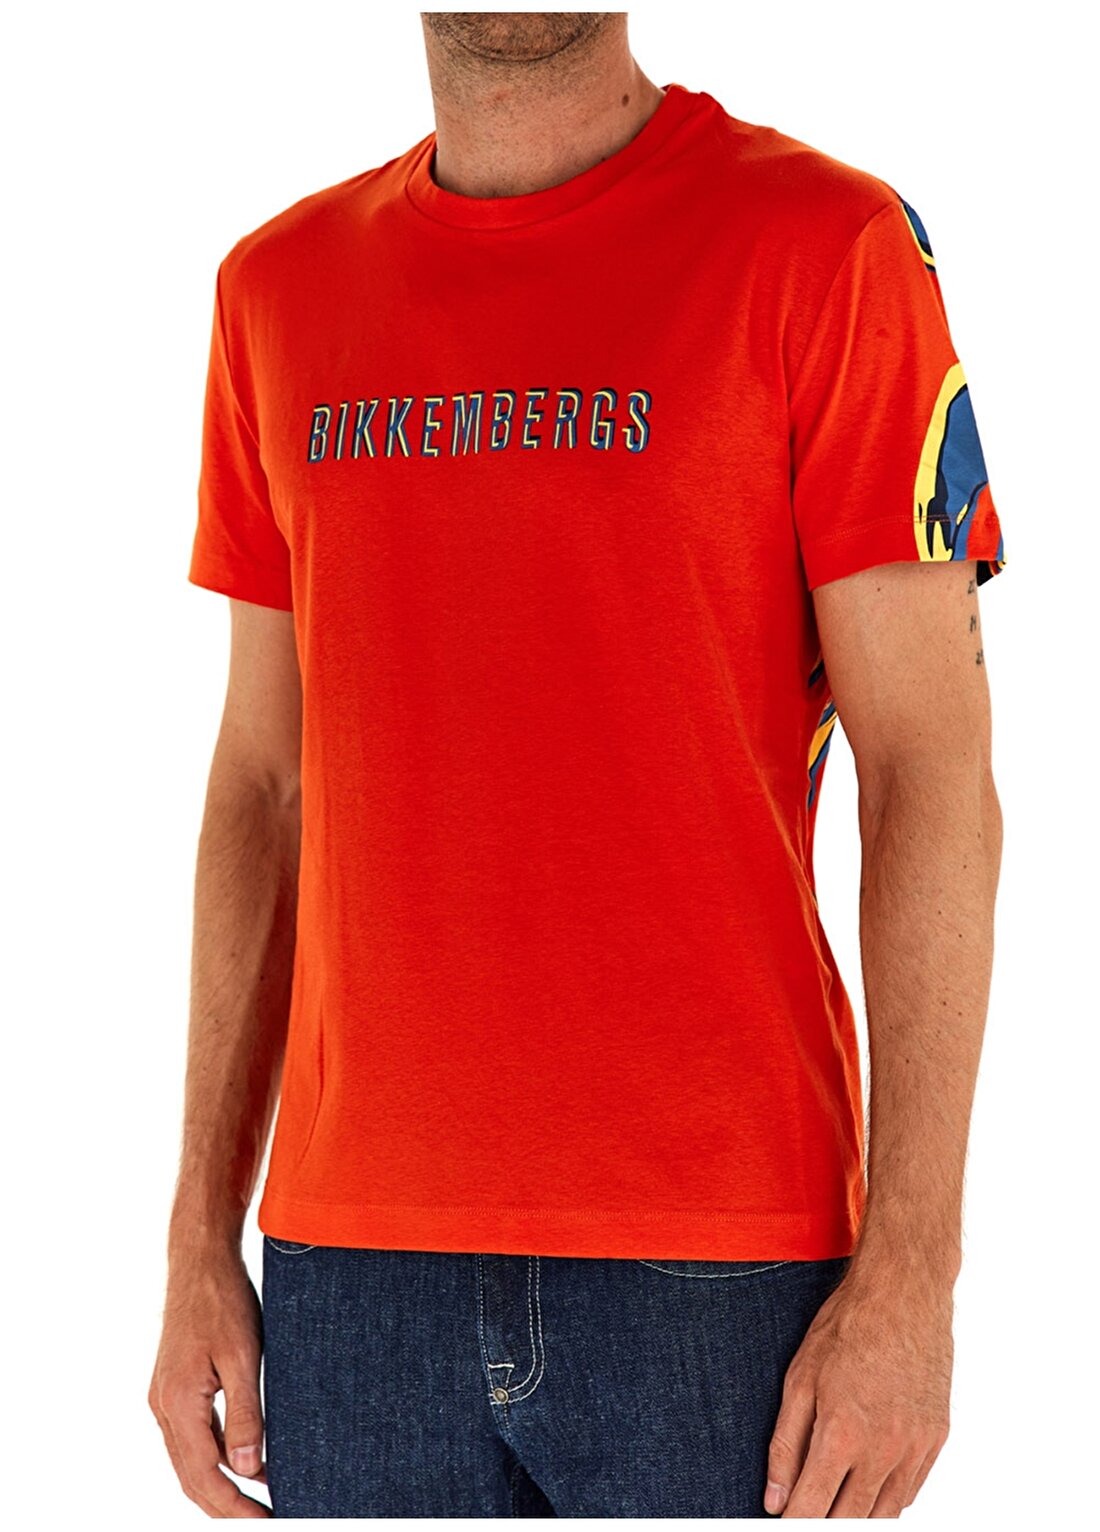 Bikkembergs Turuncu Erkek T-Shirt C 4 101 3H